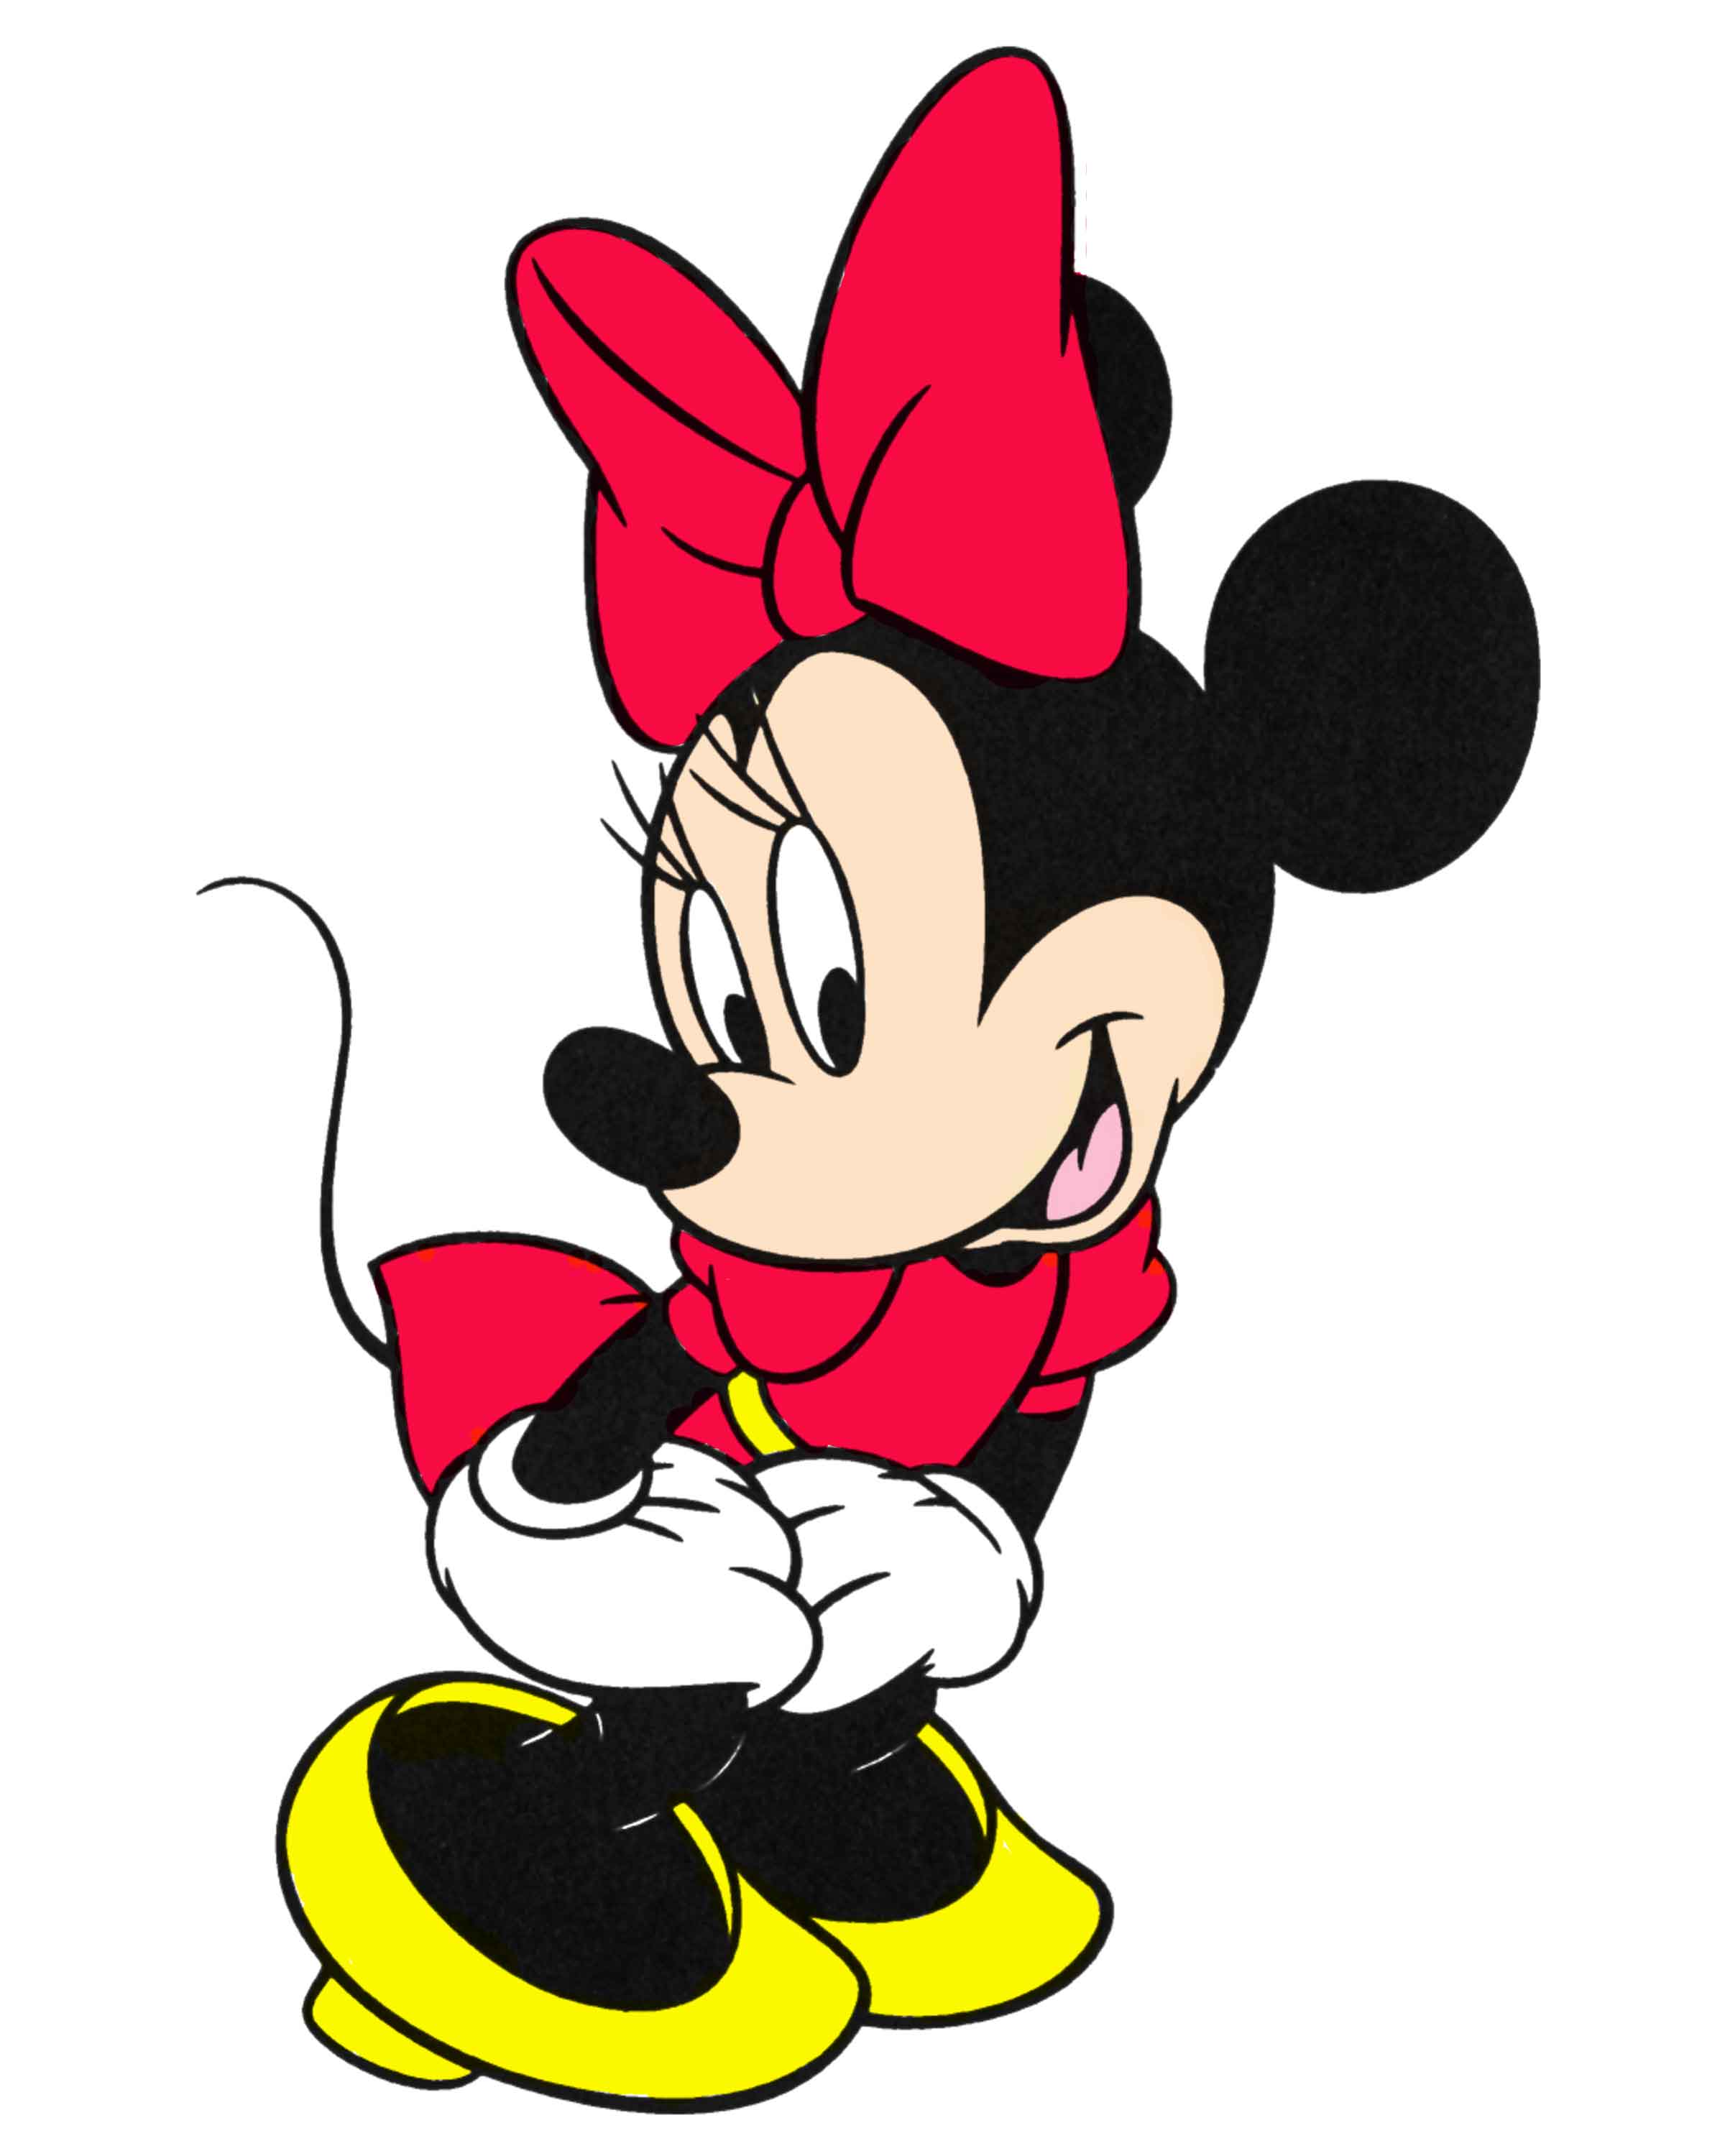 Minnie Mouse Wallpaper HD For Desktop | Cartoons Images